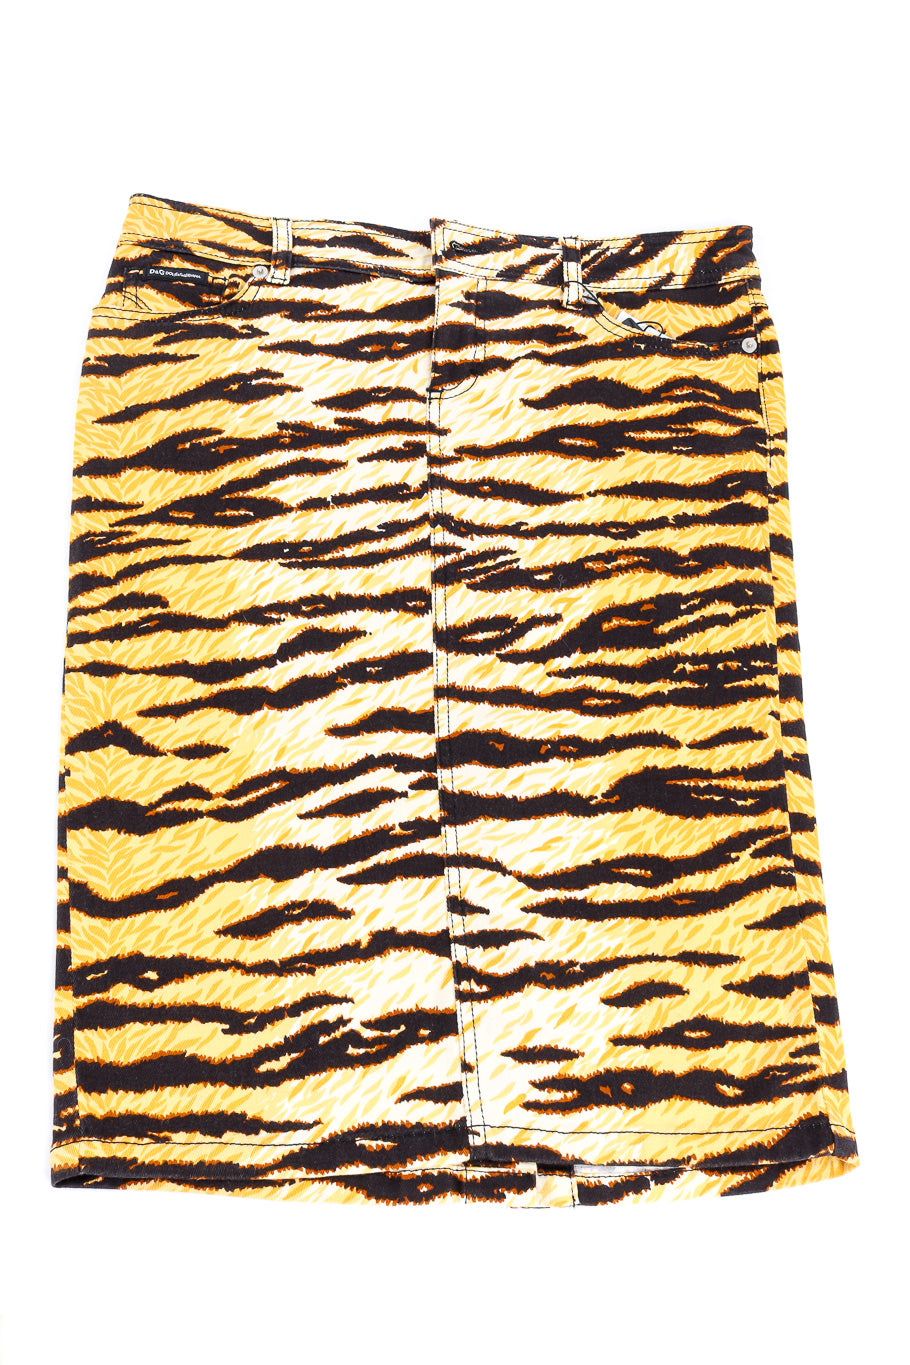 Dolce & Gabbana cotton animal skirt flat-lay @recessla